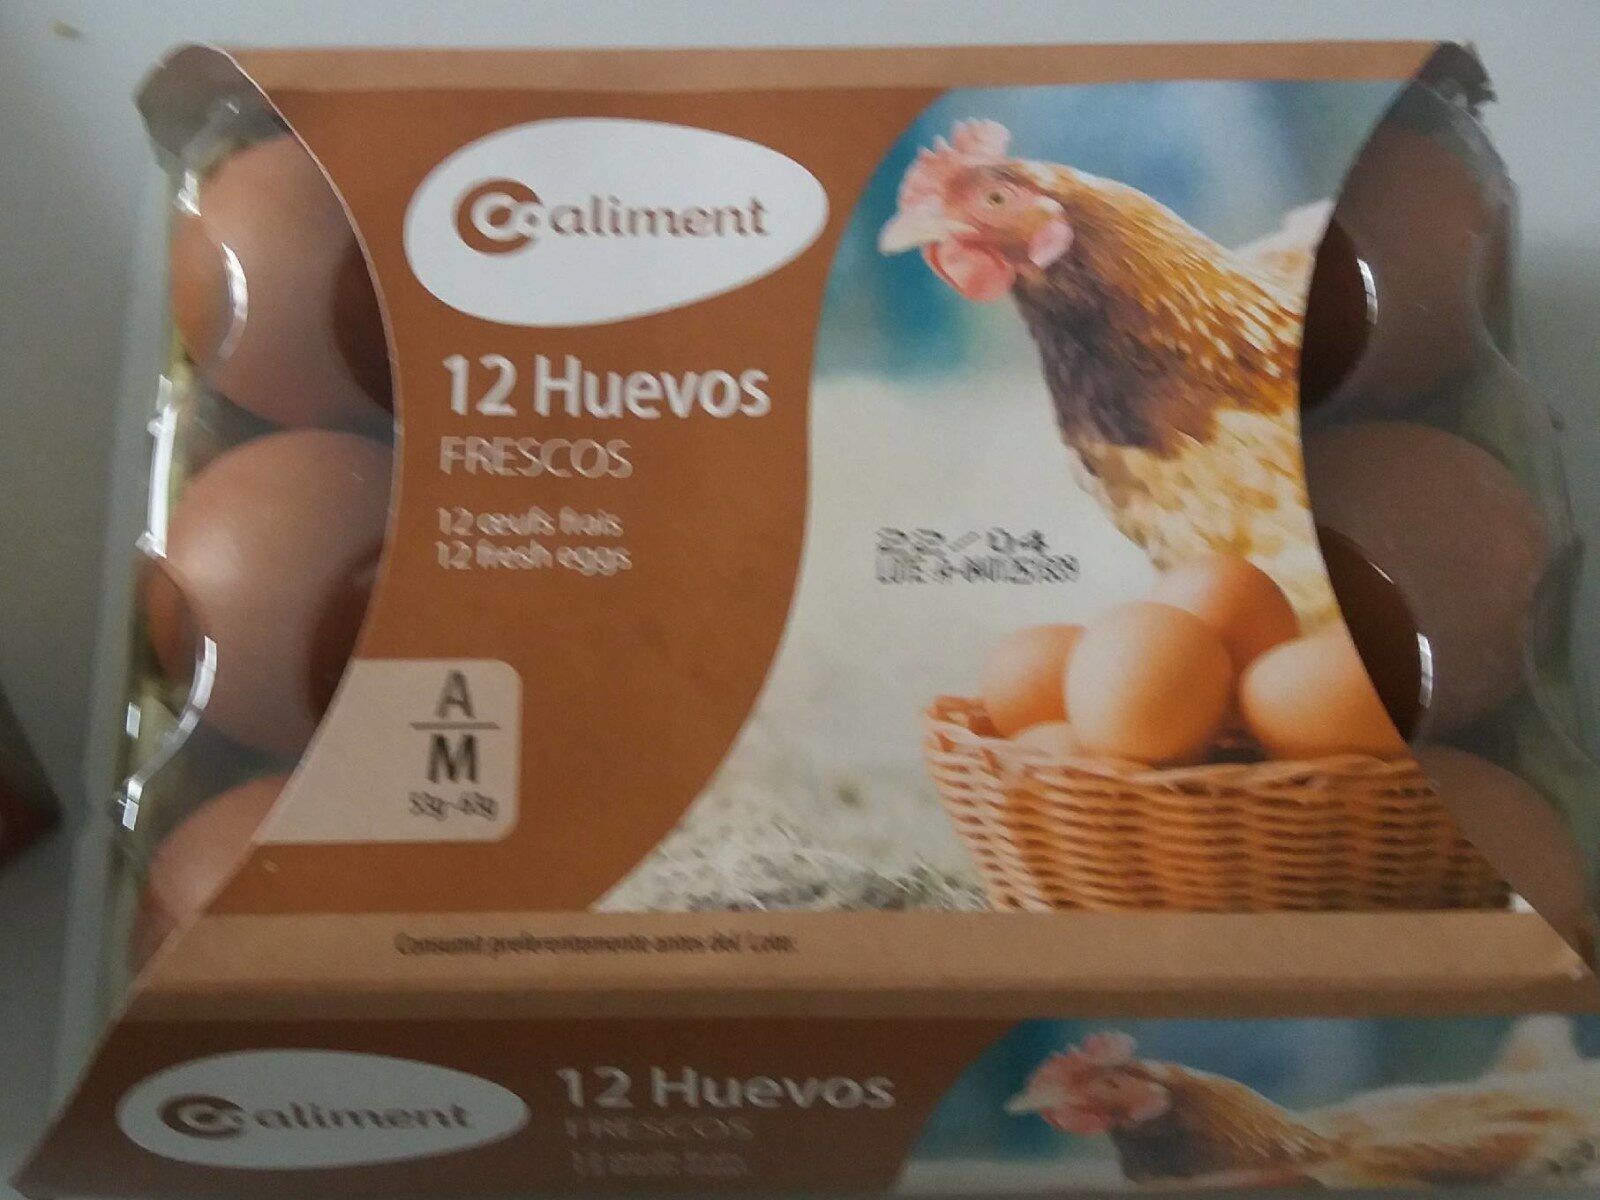 12 huevos medianos frescos - Product - es